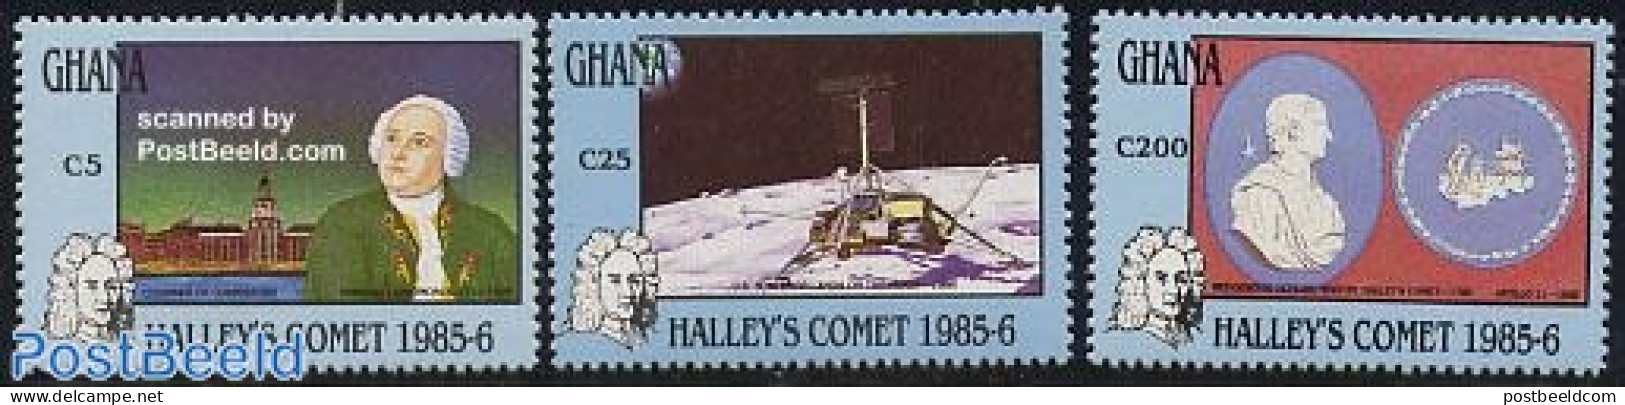 Ghana 1987 Halleys Comet 3v, Mint NH, Science - Astronomy - Halley's Comet - Astrology